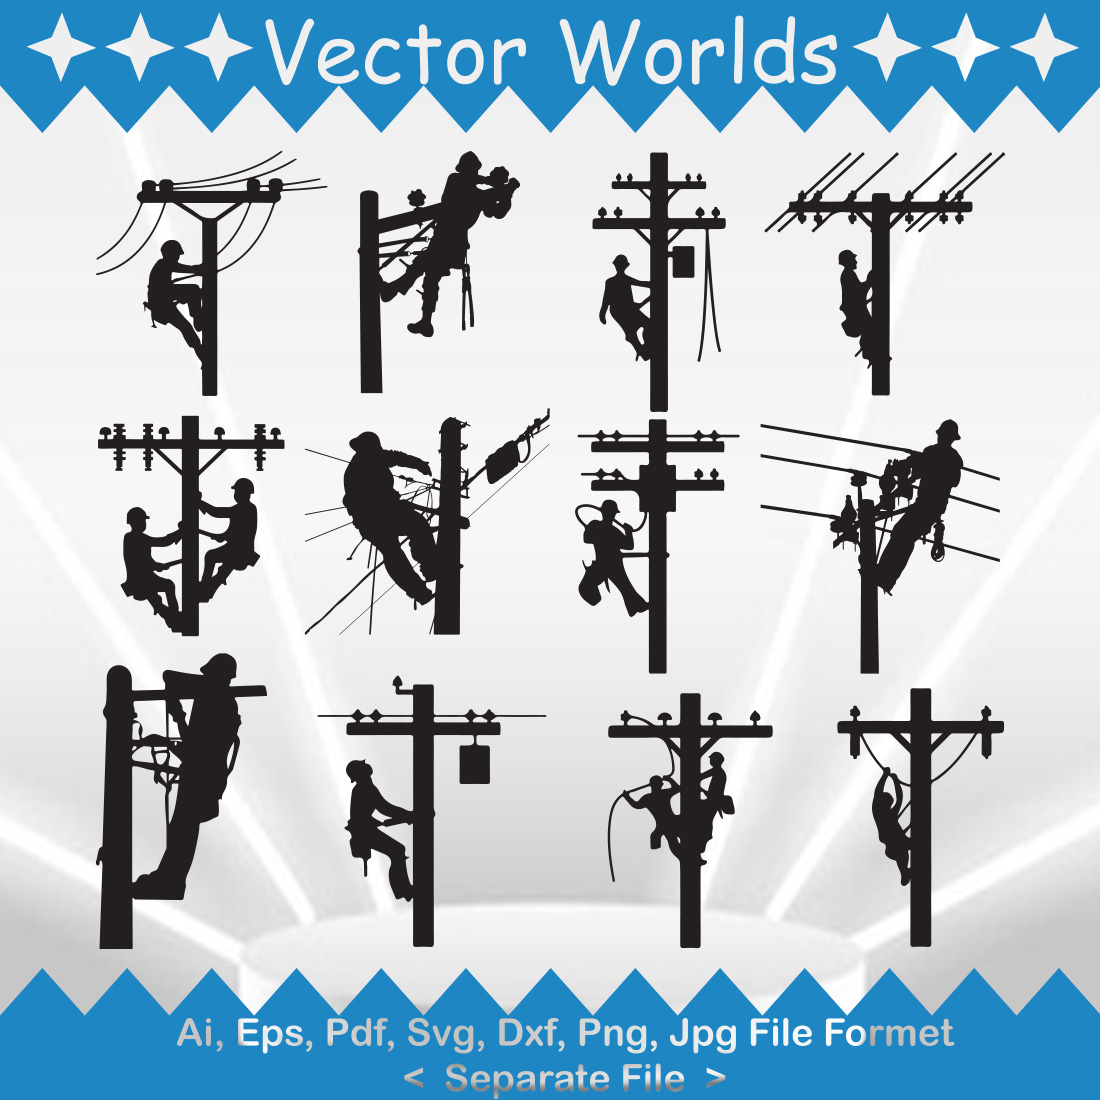 Lineman SVG Vector Design cover image.